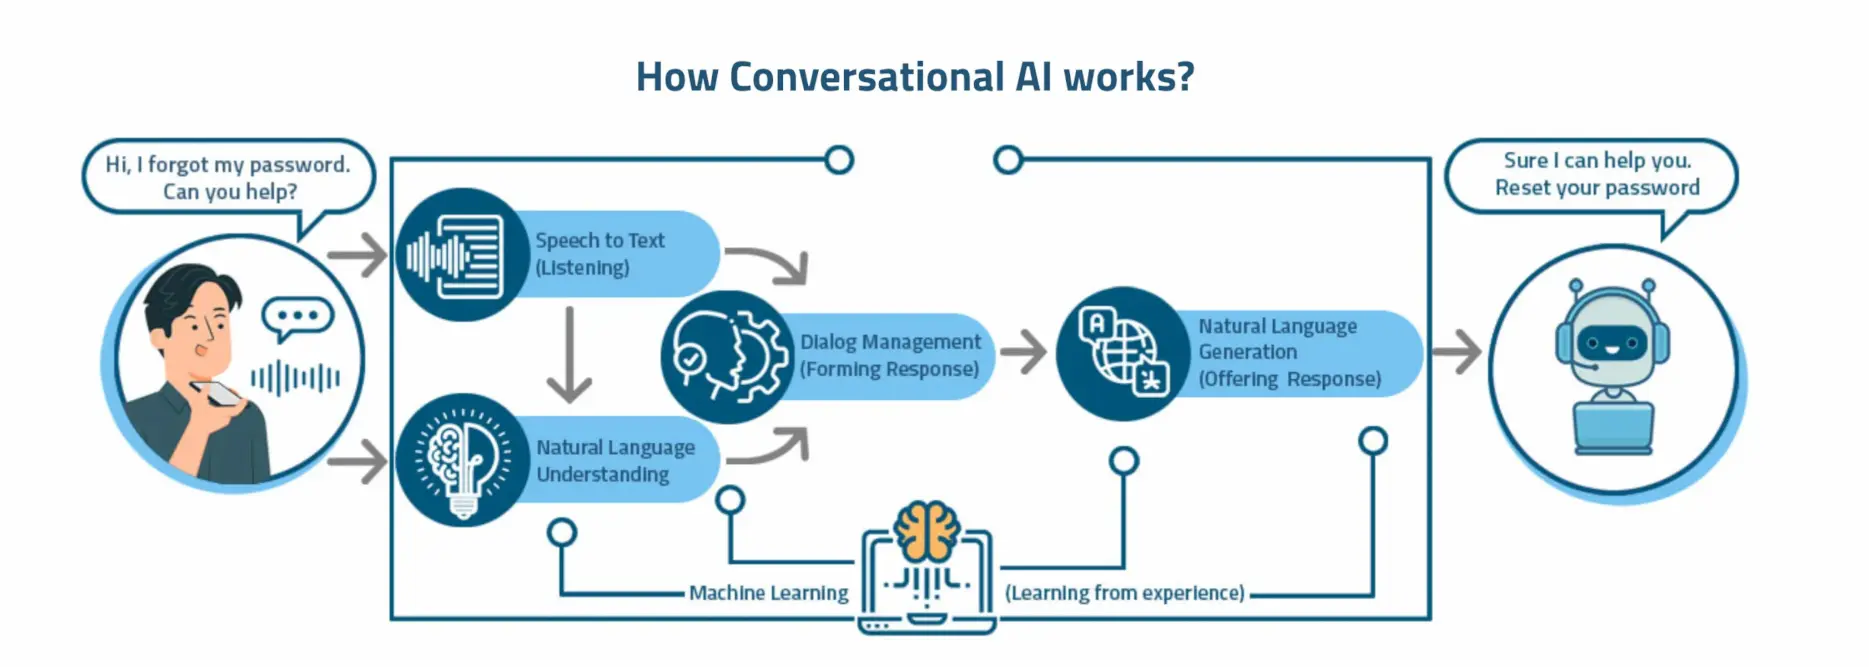 How Conversational AI Works?